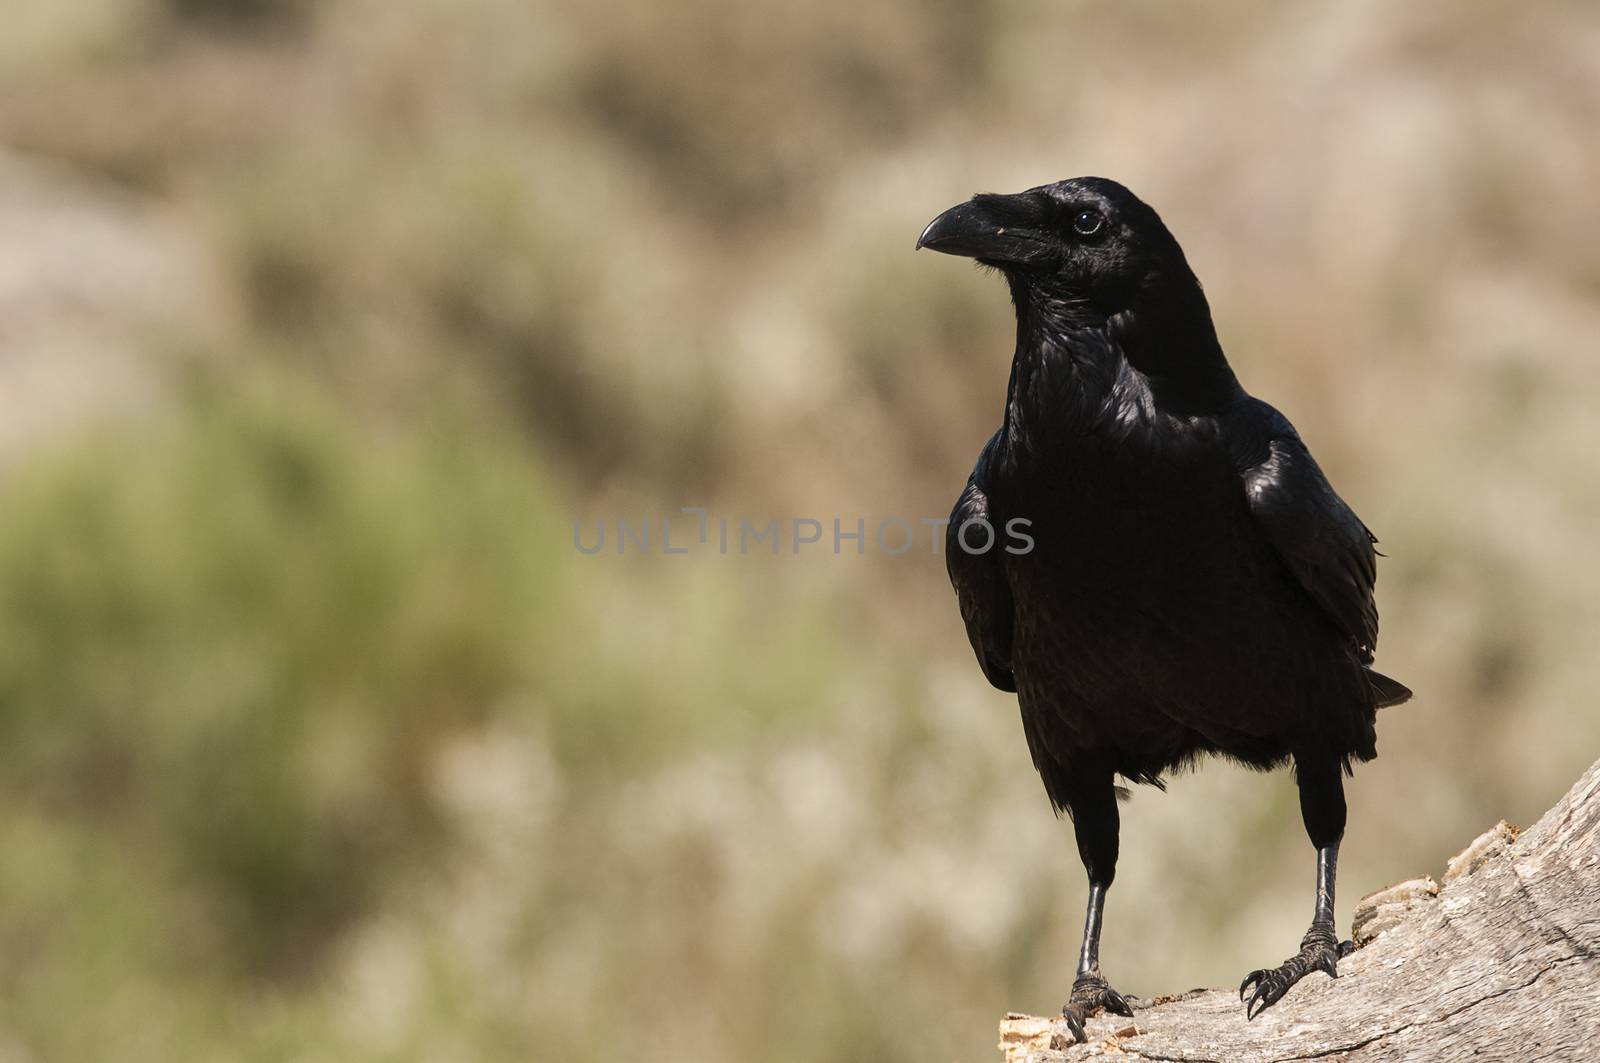 Raven - Corvus corax, Portrait waiting on a rock by jalonsohu@gmail.com